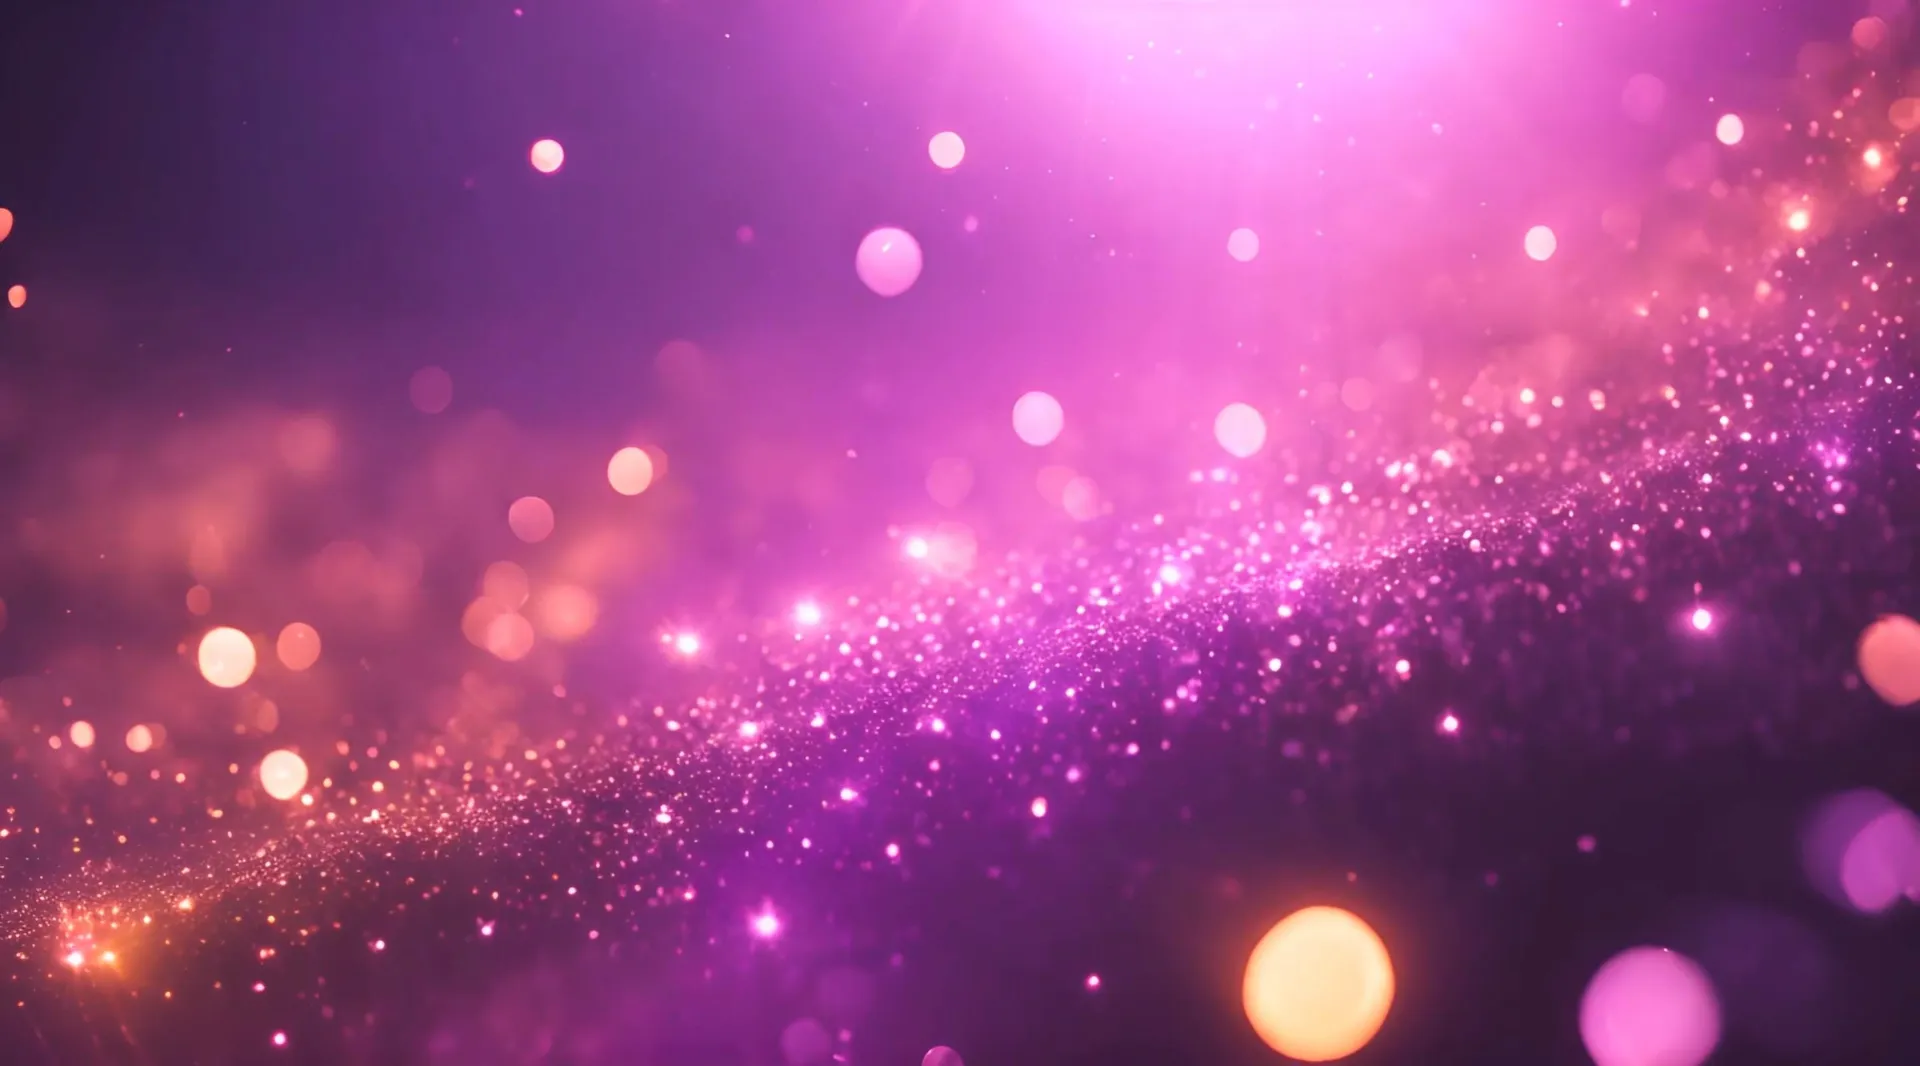 Glowing Particles in Pink Haze Backdrop Video Loop